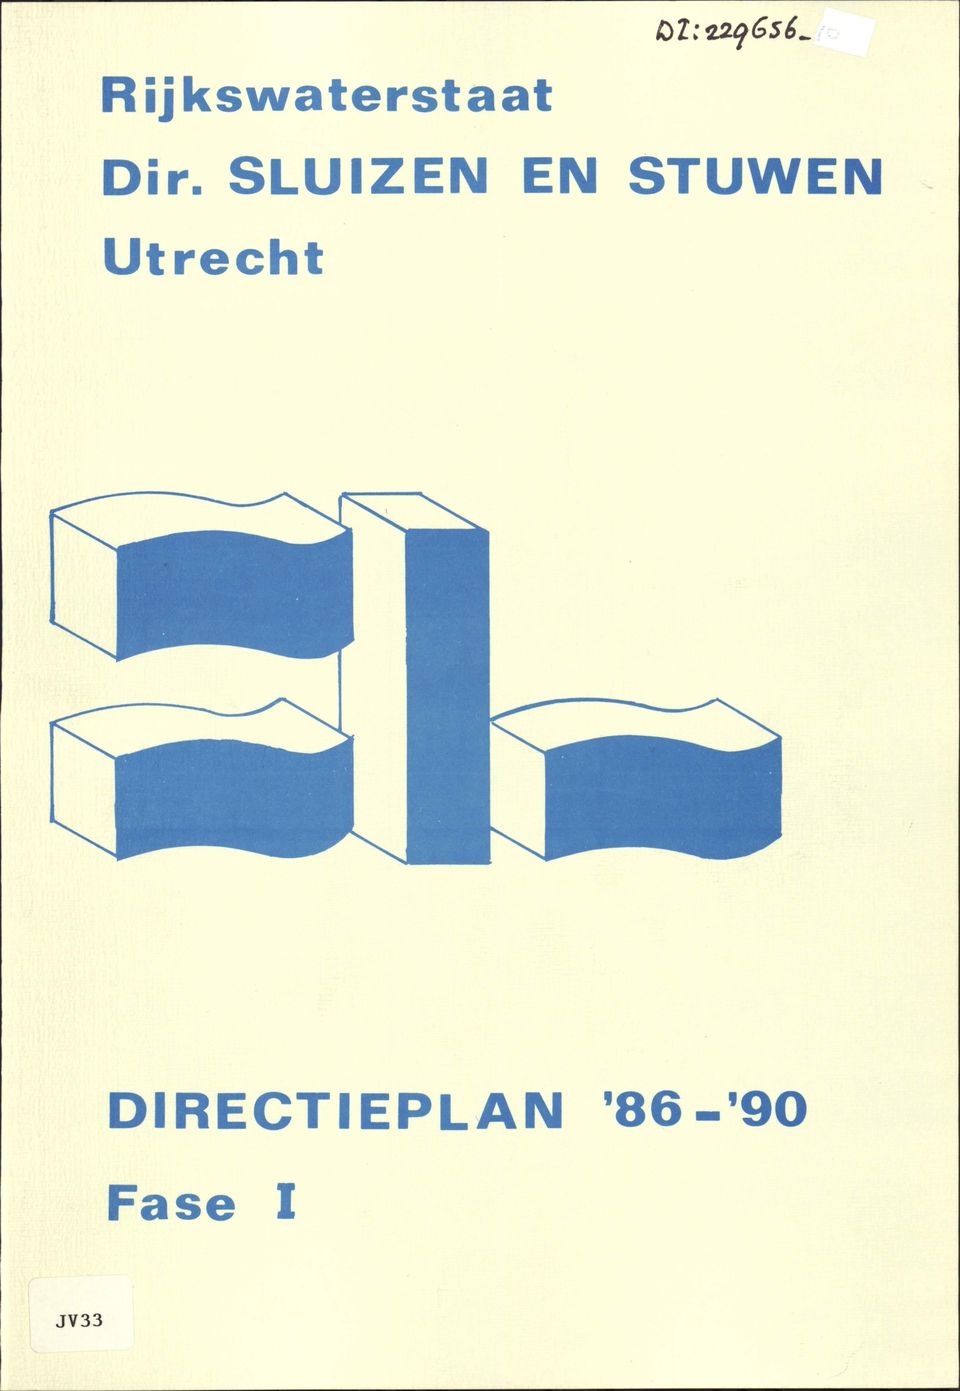 Utrecht DI RECTI